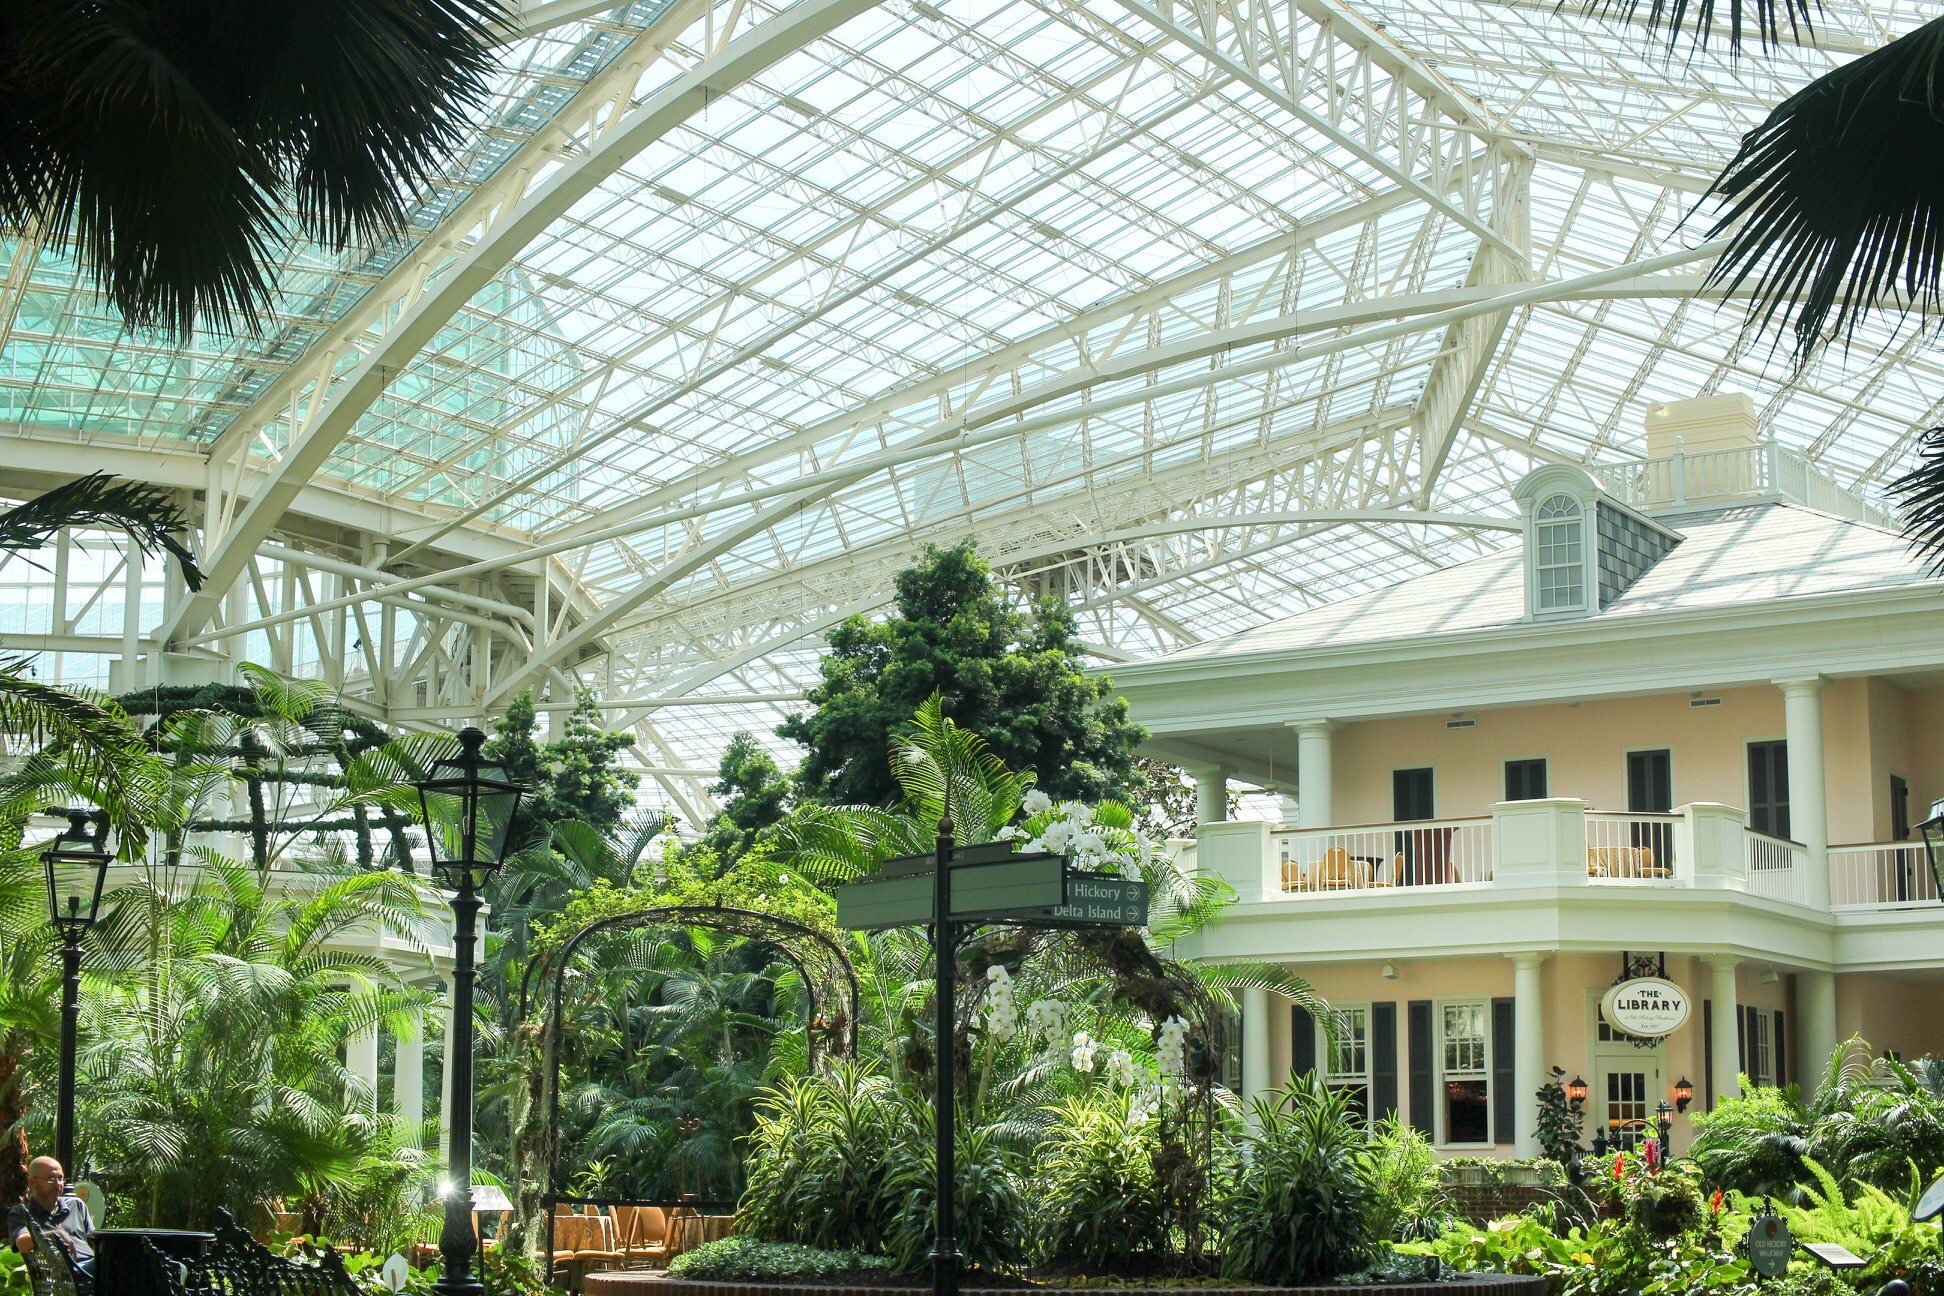 Inside Gaylord Opryland Resort greenhouse in Nashville, Tennessee